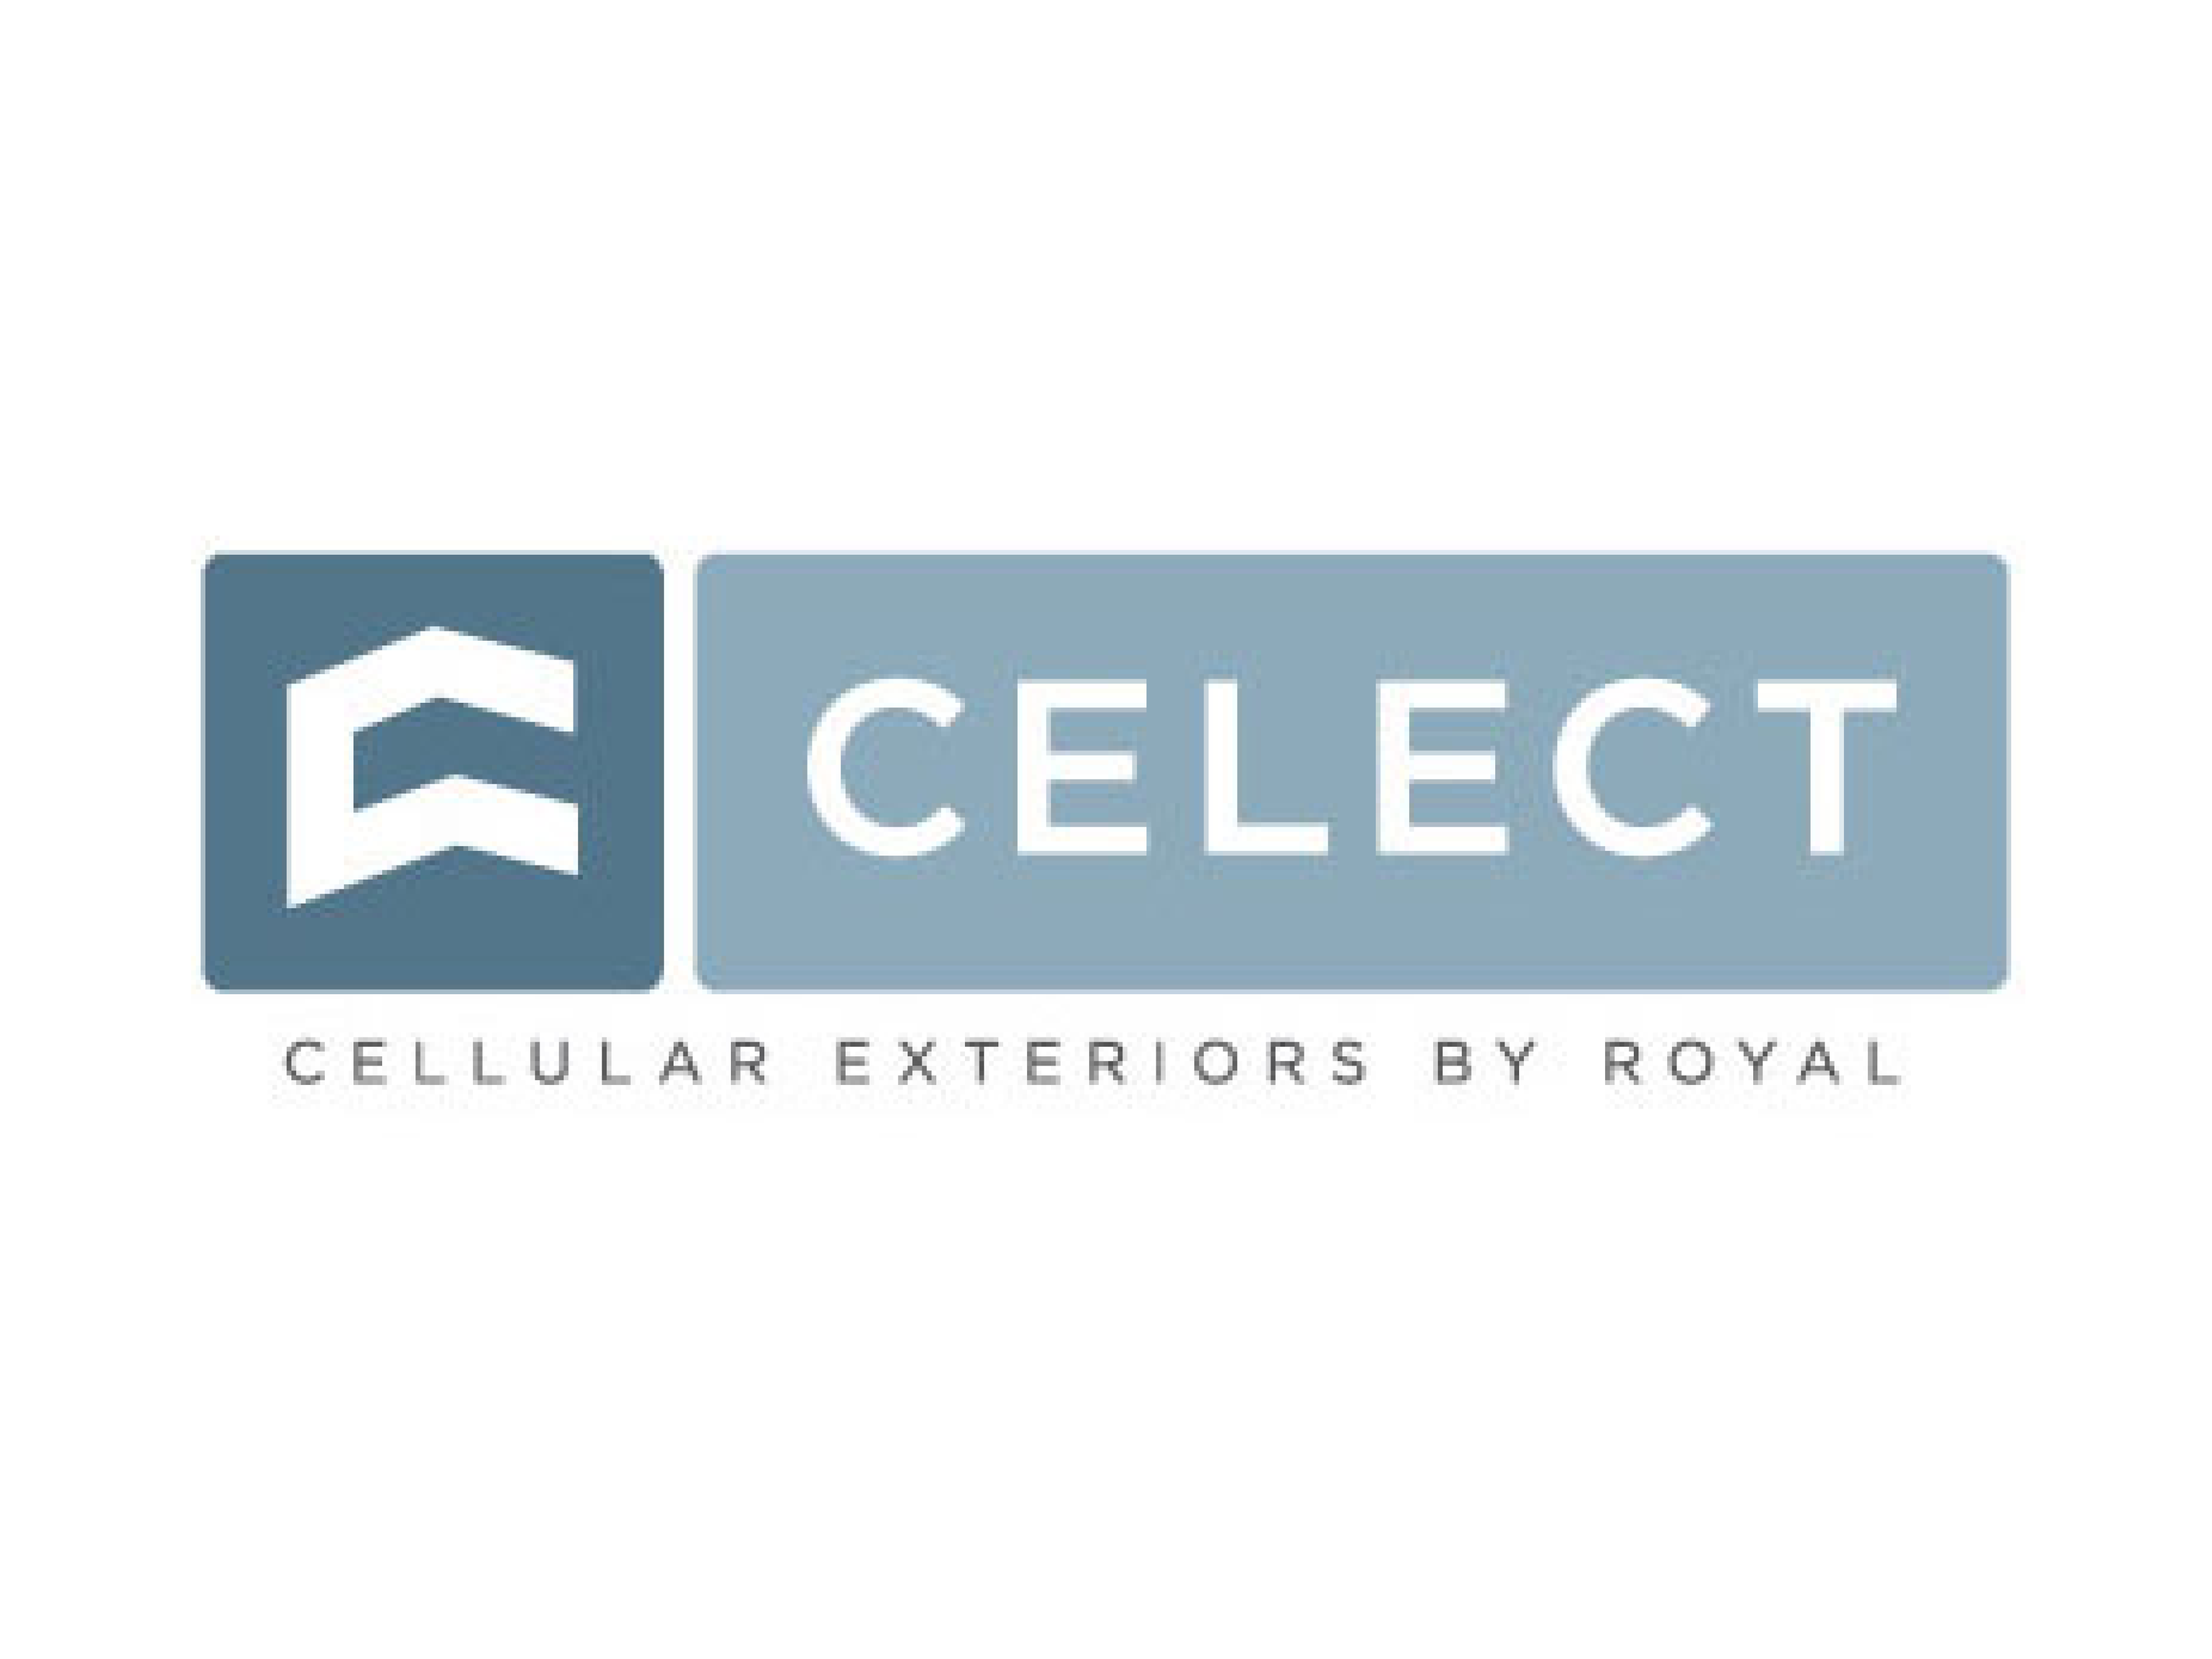 celect-logo